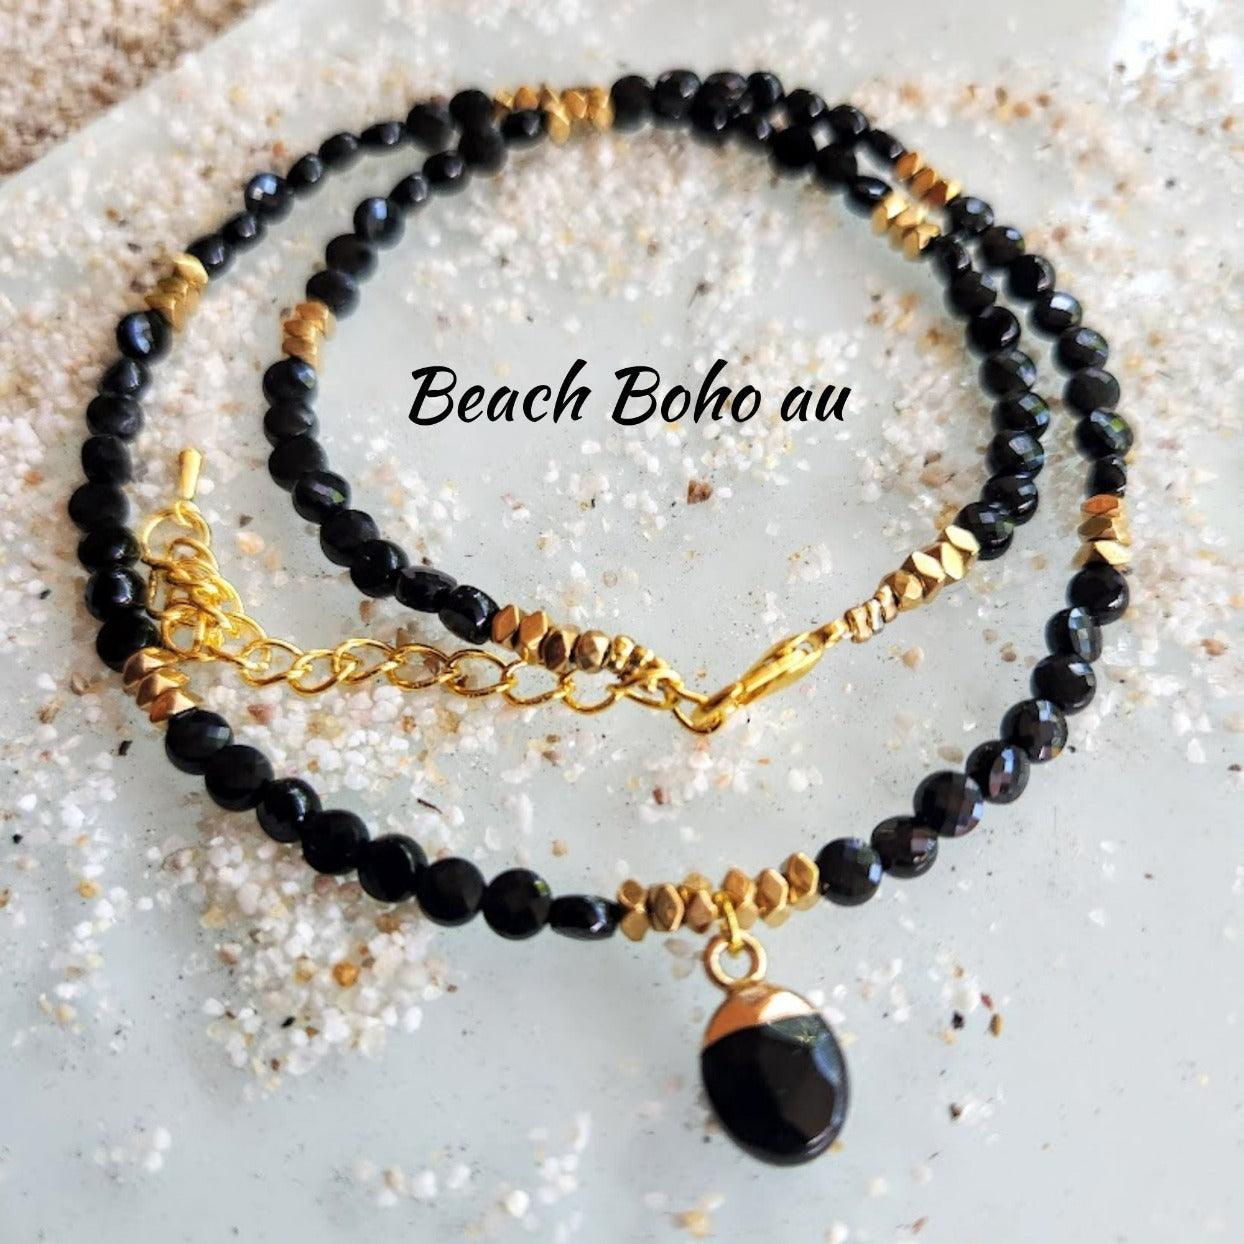 REBIRTH - ONYX GOLD NECKLACE - Premium necklaces from www.beachboho,com.au - Just $95! Shop now at www.beachboho.com.au